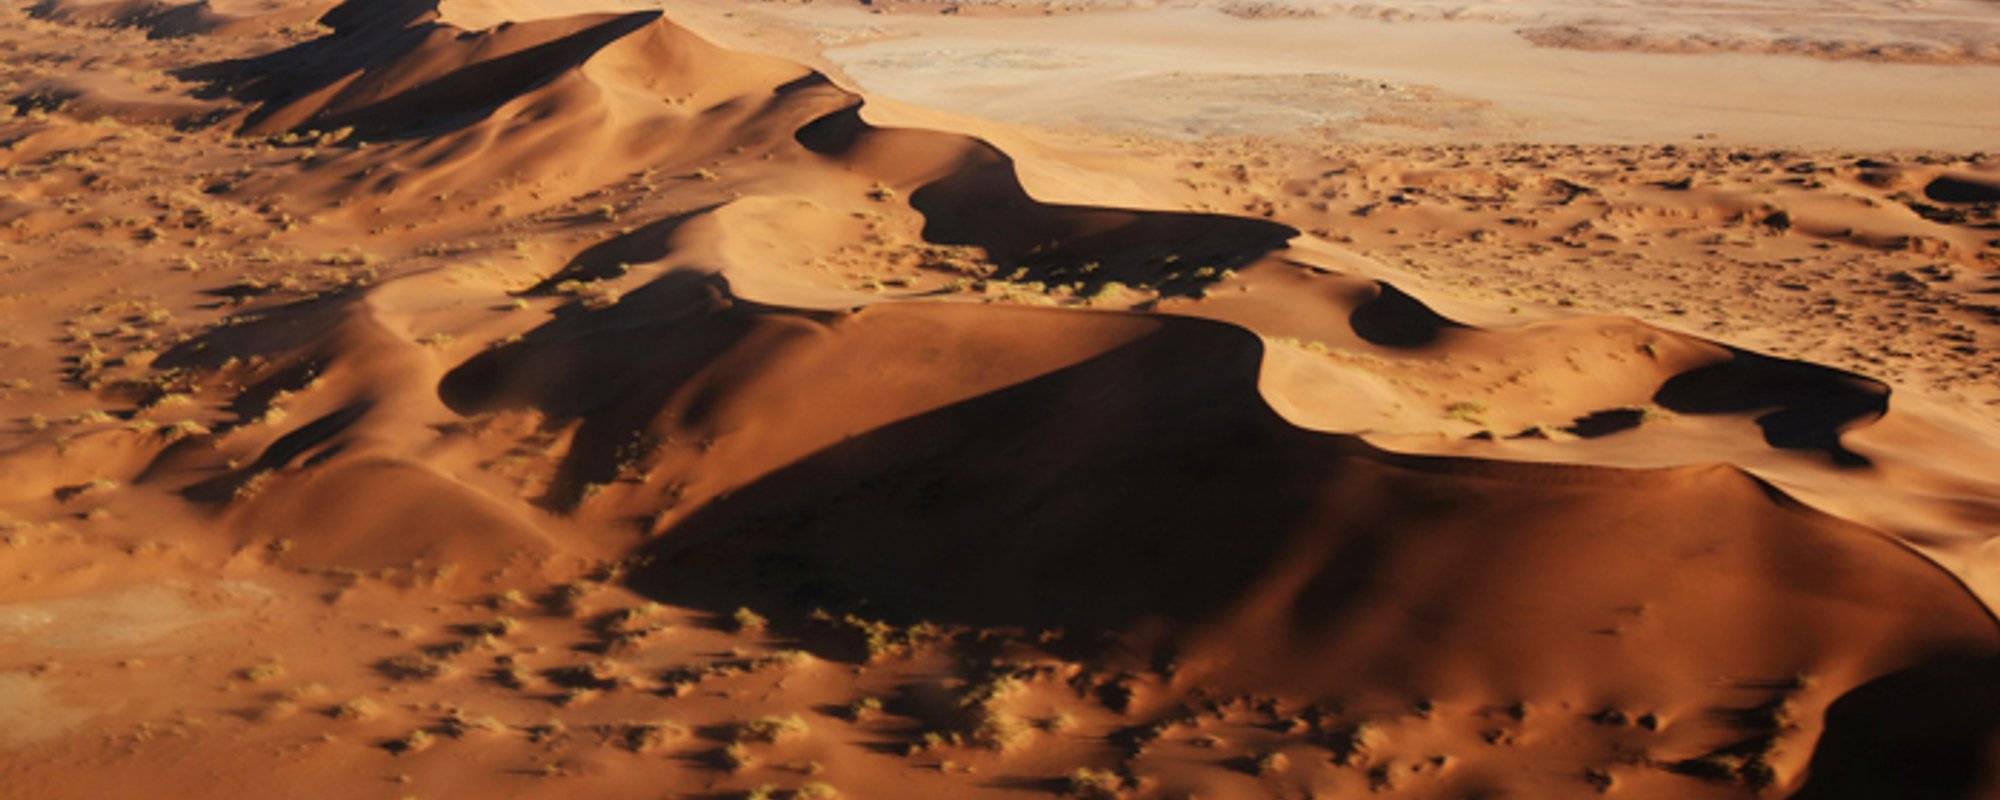 The Namib Desert – an otherworldly landscape